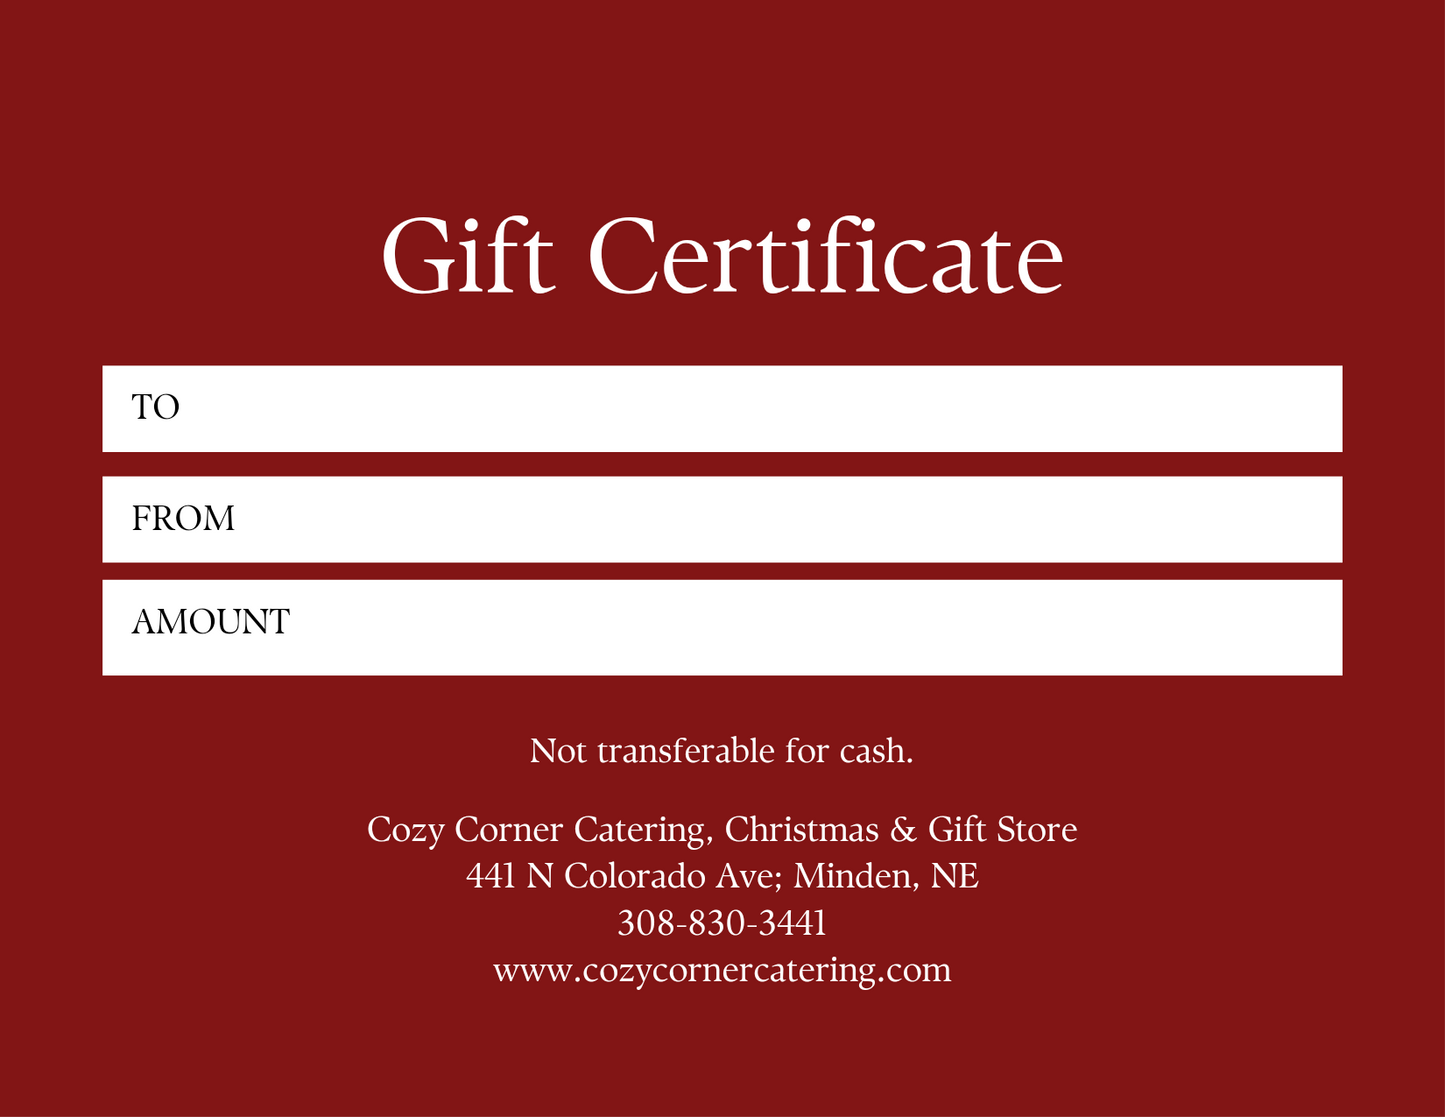 Cozy Corner Christmas & Gift Store